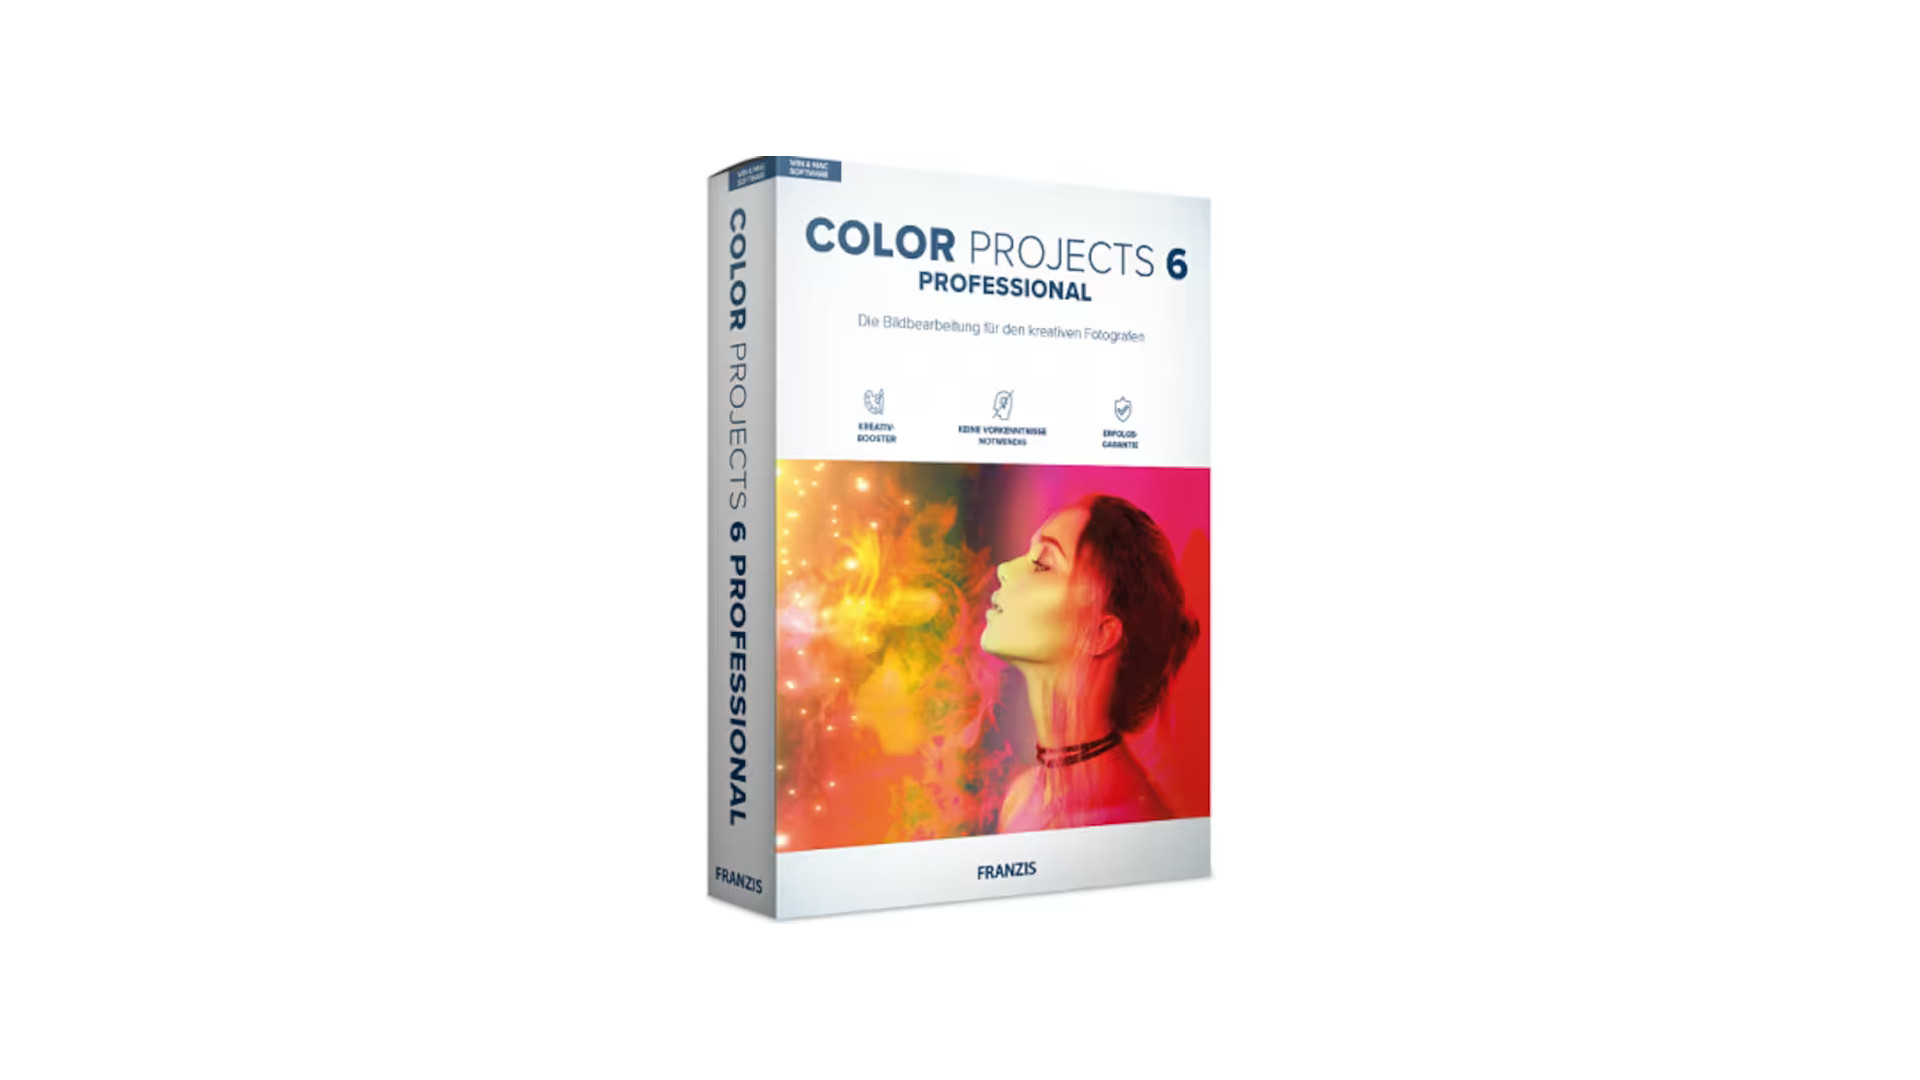 COLOR projects 6 Pro - Project Software Key (Lifetime / 1 PC), 33.89$